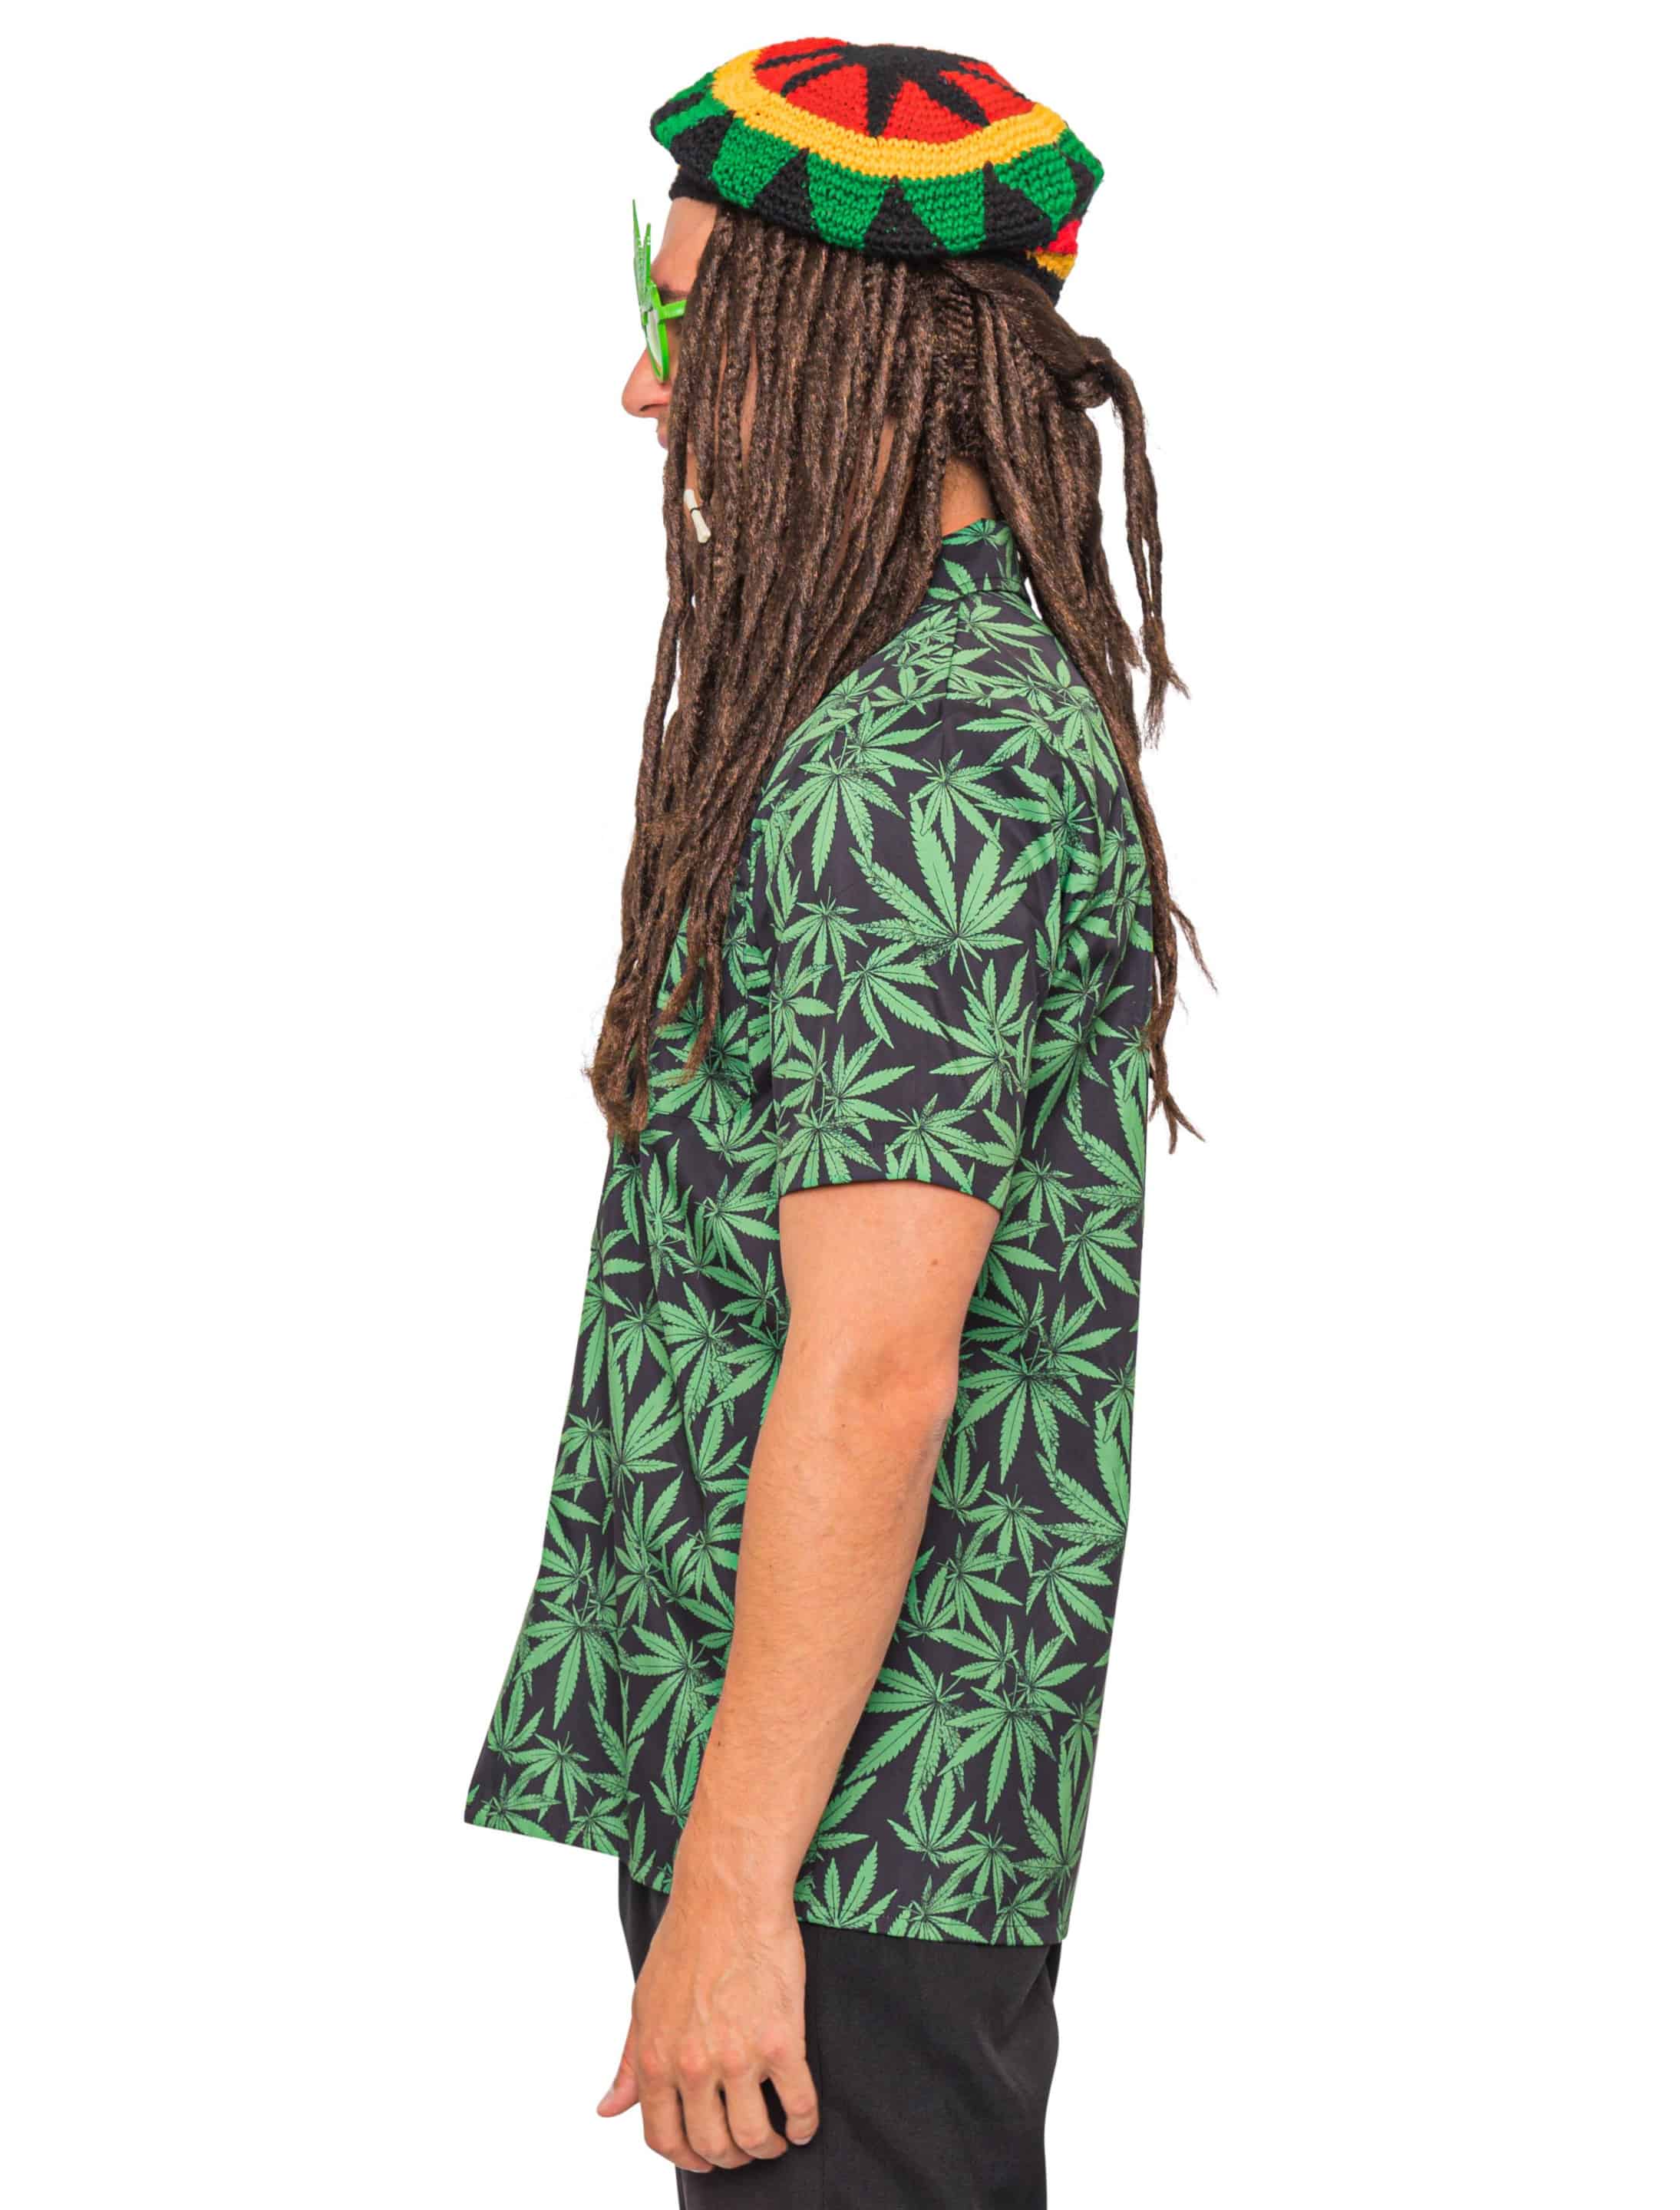 Hemd Cannabis Herren grün XL